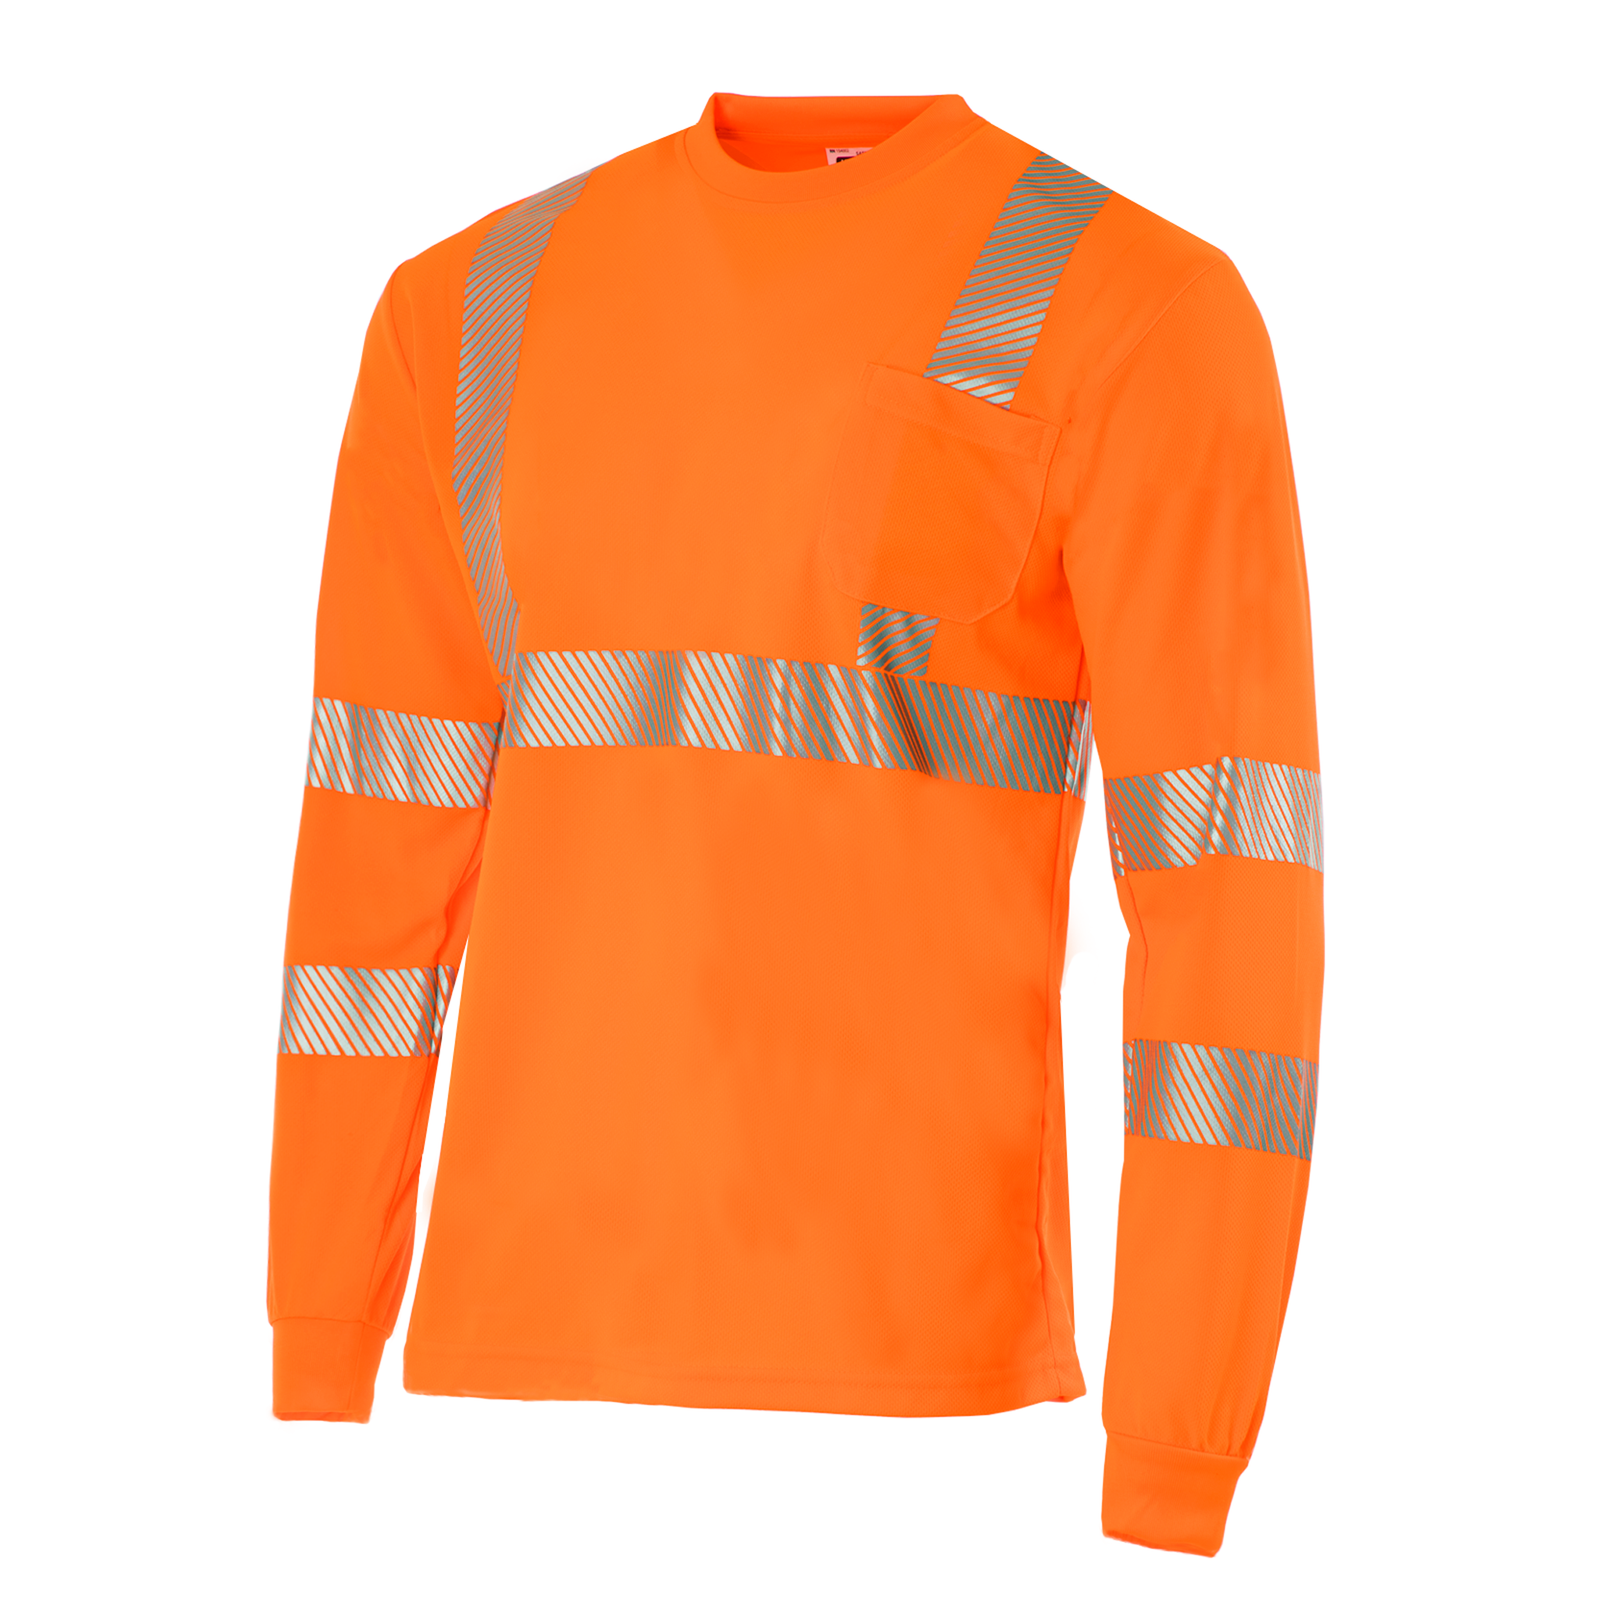 Diagonal of the JORESTECH Hi-Vis orange heat transfer reflective long sleeve safety pocket shirt  ANSI compliant type R class 3